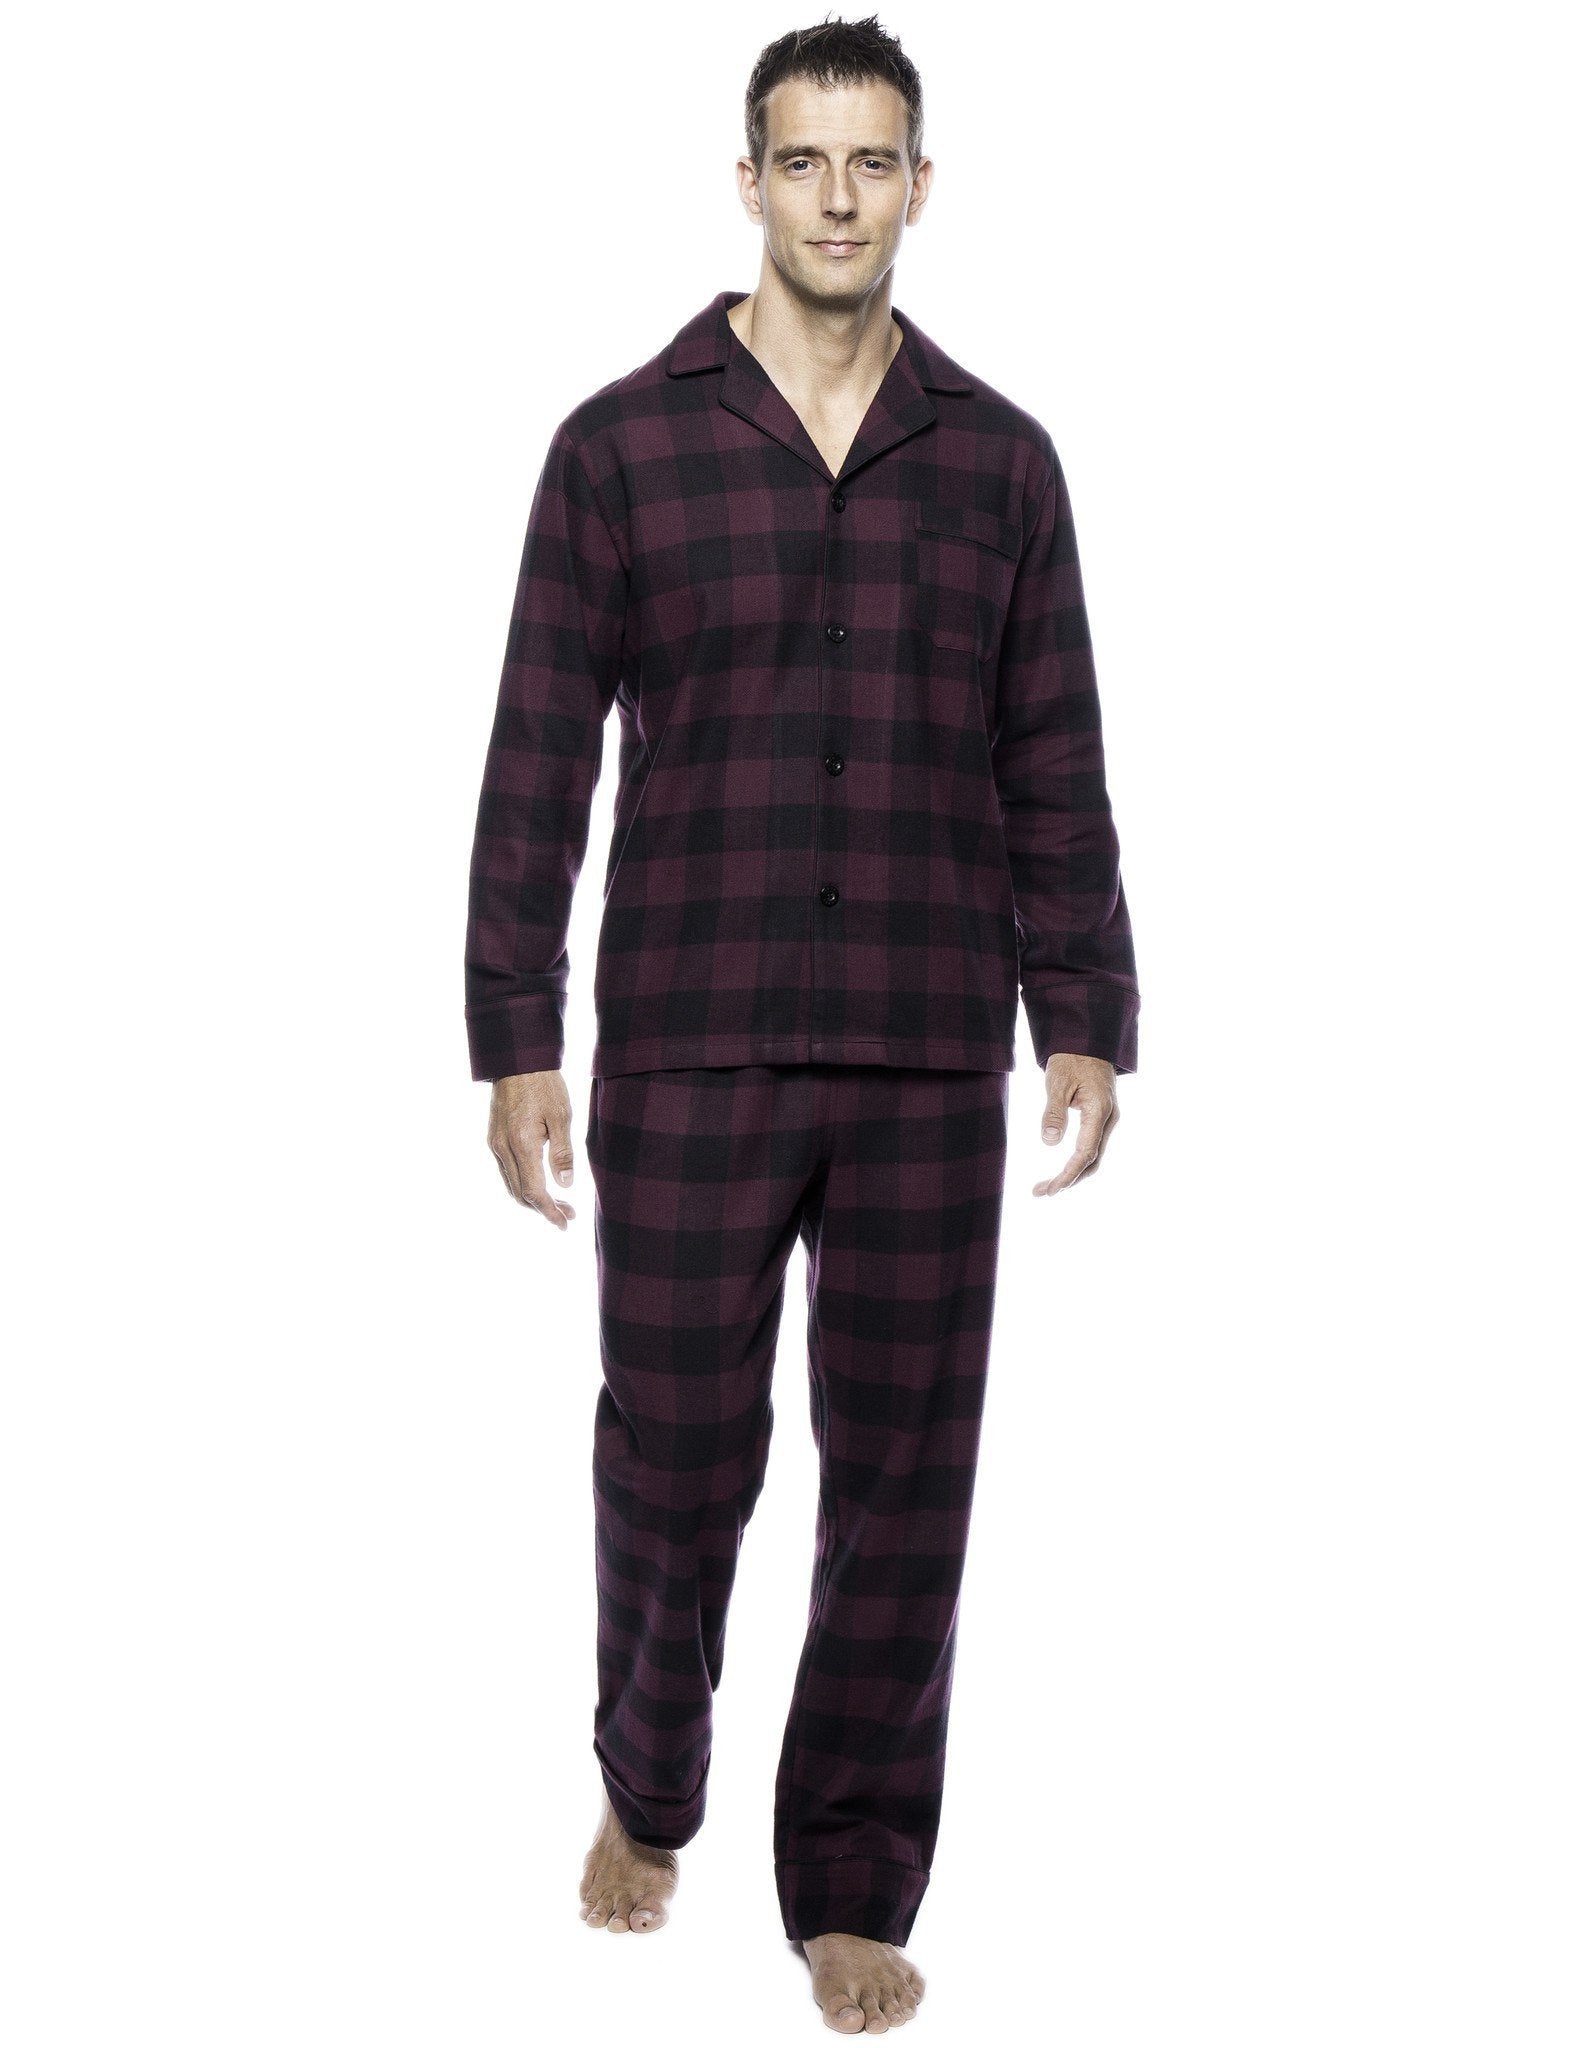 Box Packaged Men's Premium 100% Cotton Flannel Pajama Sleepwear Set - Gingham Fig/Black